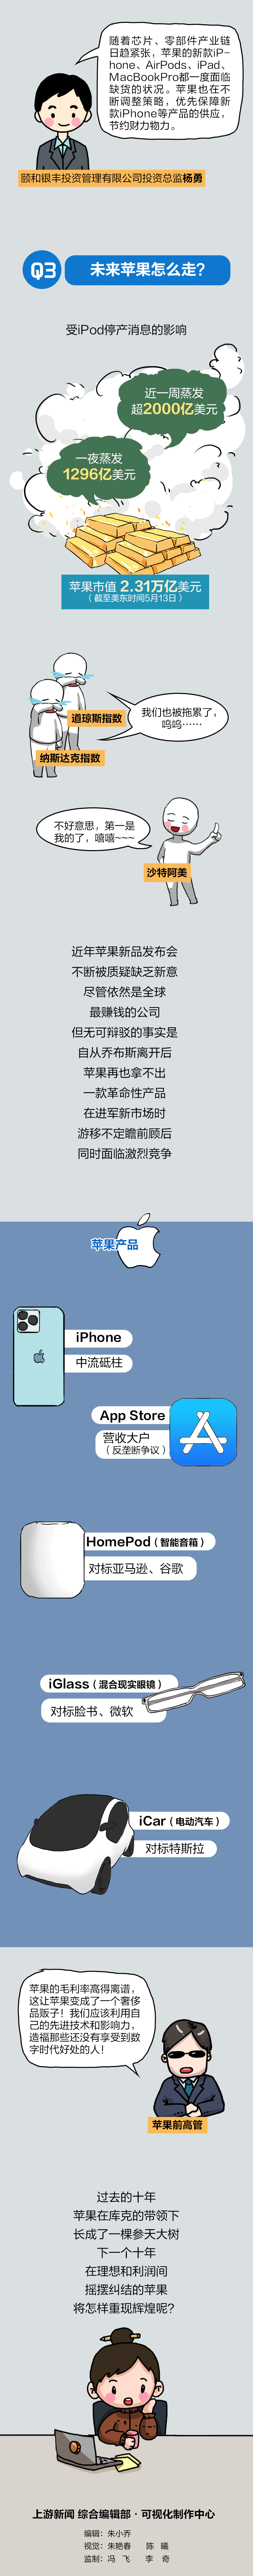 iPod停产：是乔布斯时代的终结，还是苹果下坡路的开始？深圳市委书记调任广西任何职